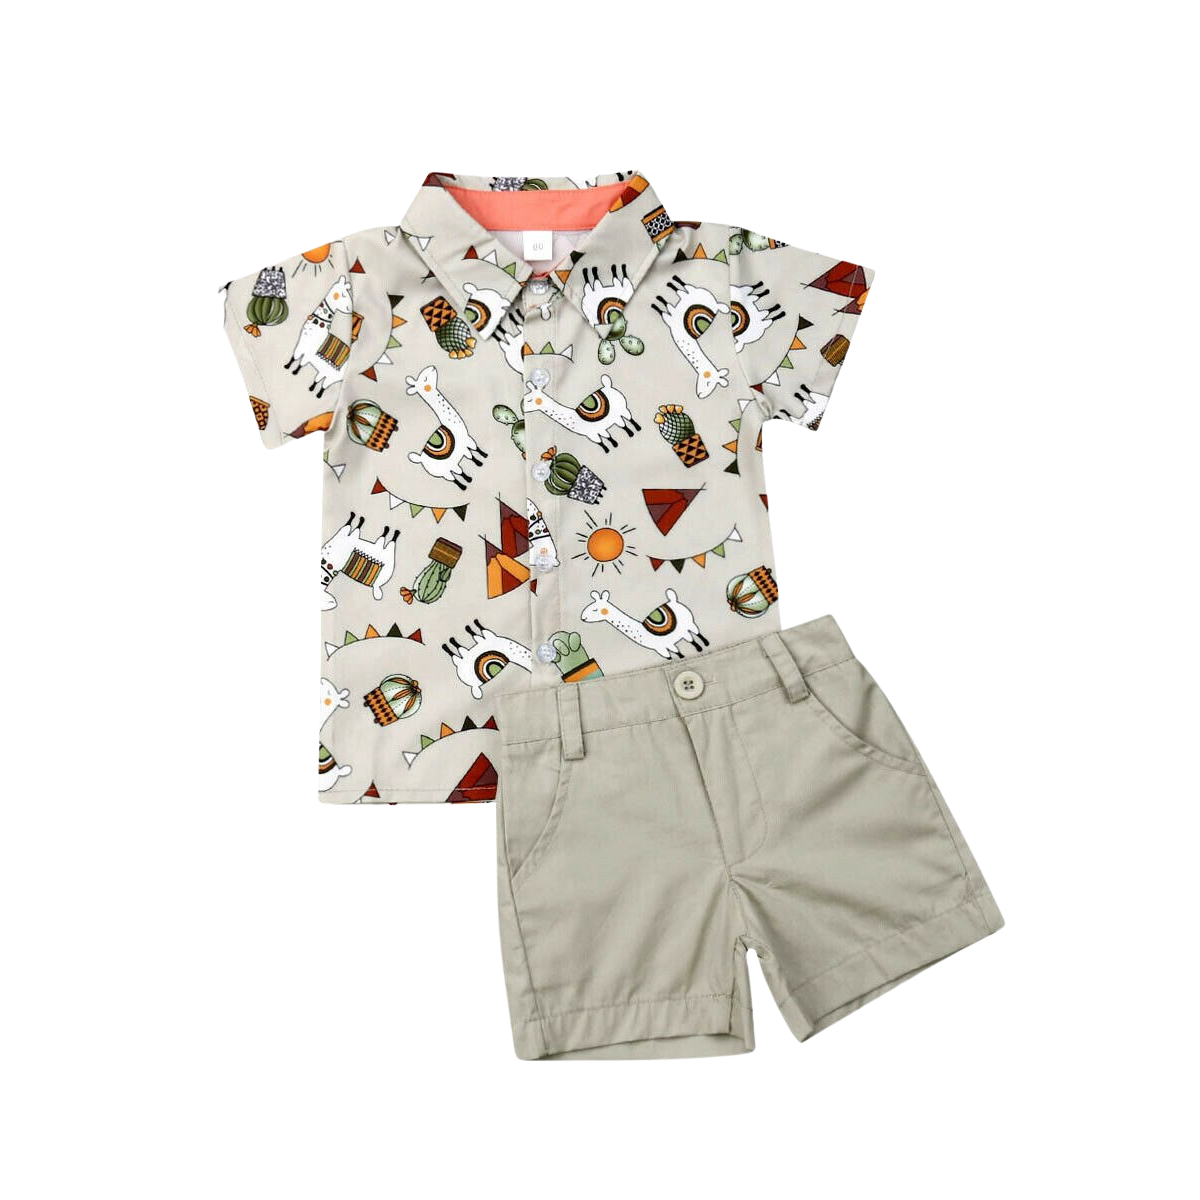 Alpaca Khaki Chino Toddler Clothing Set